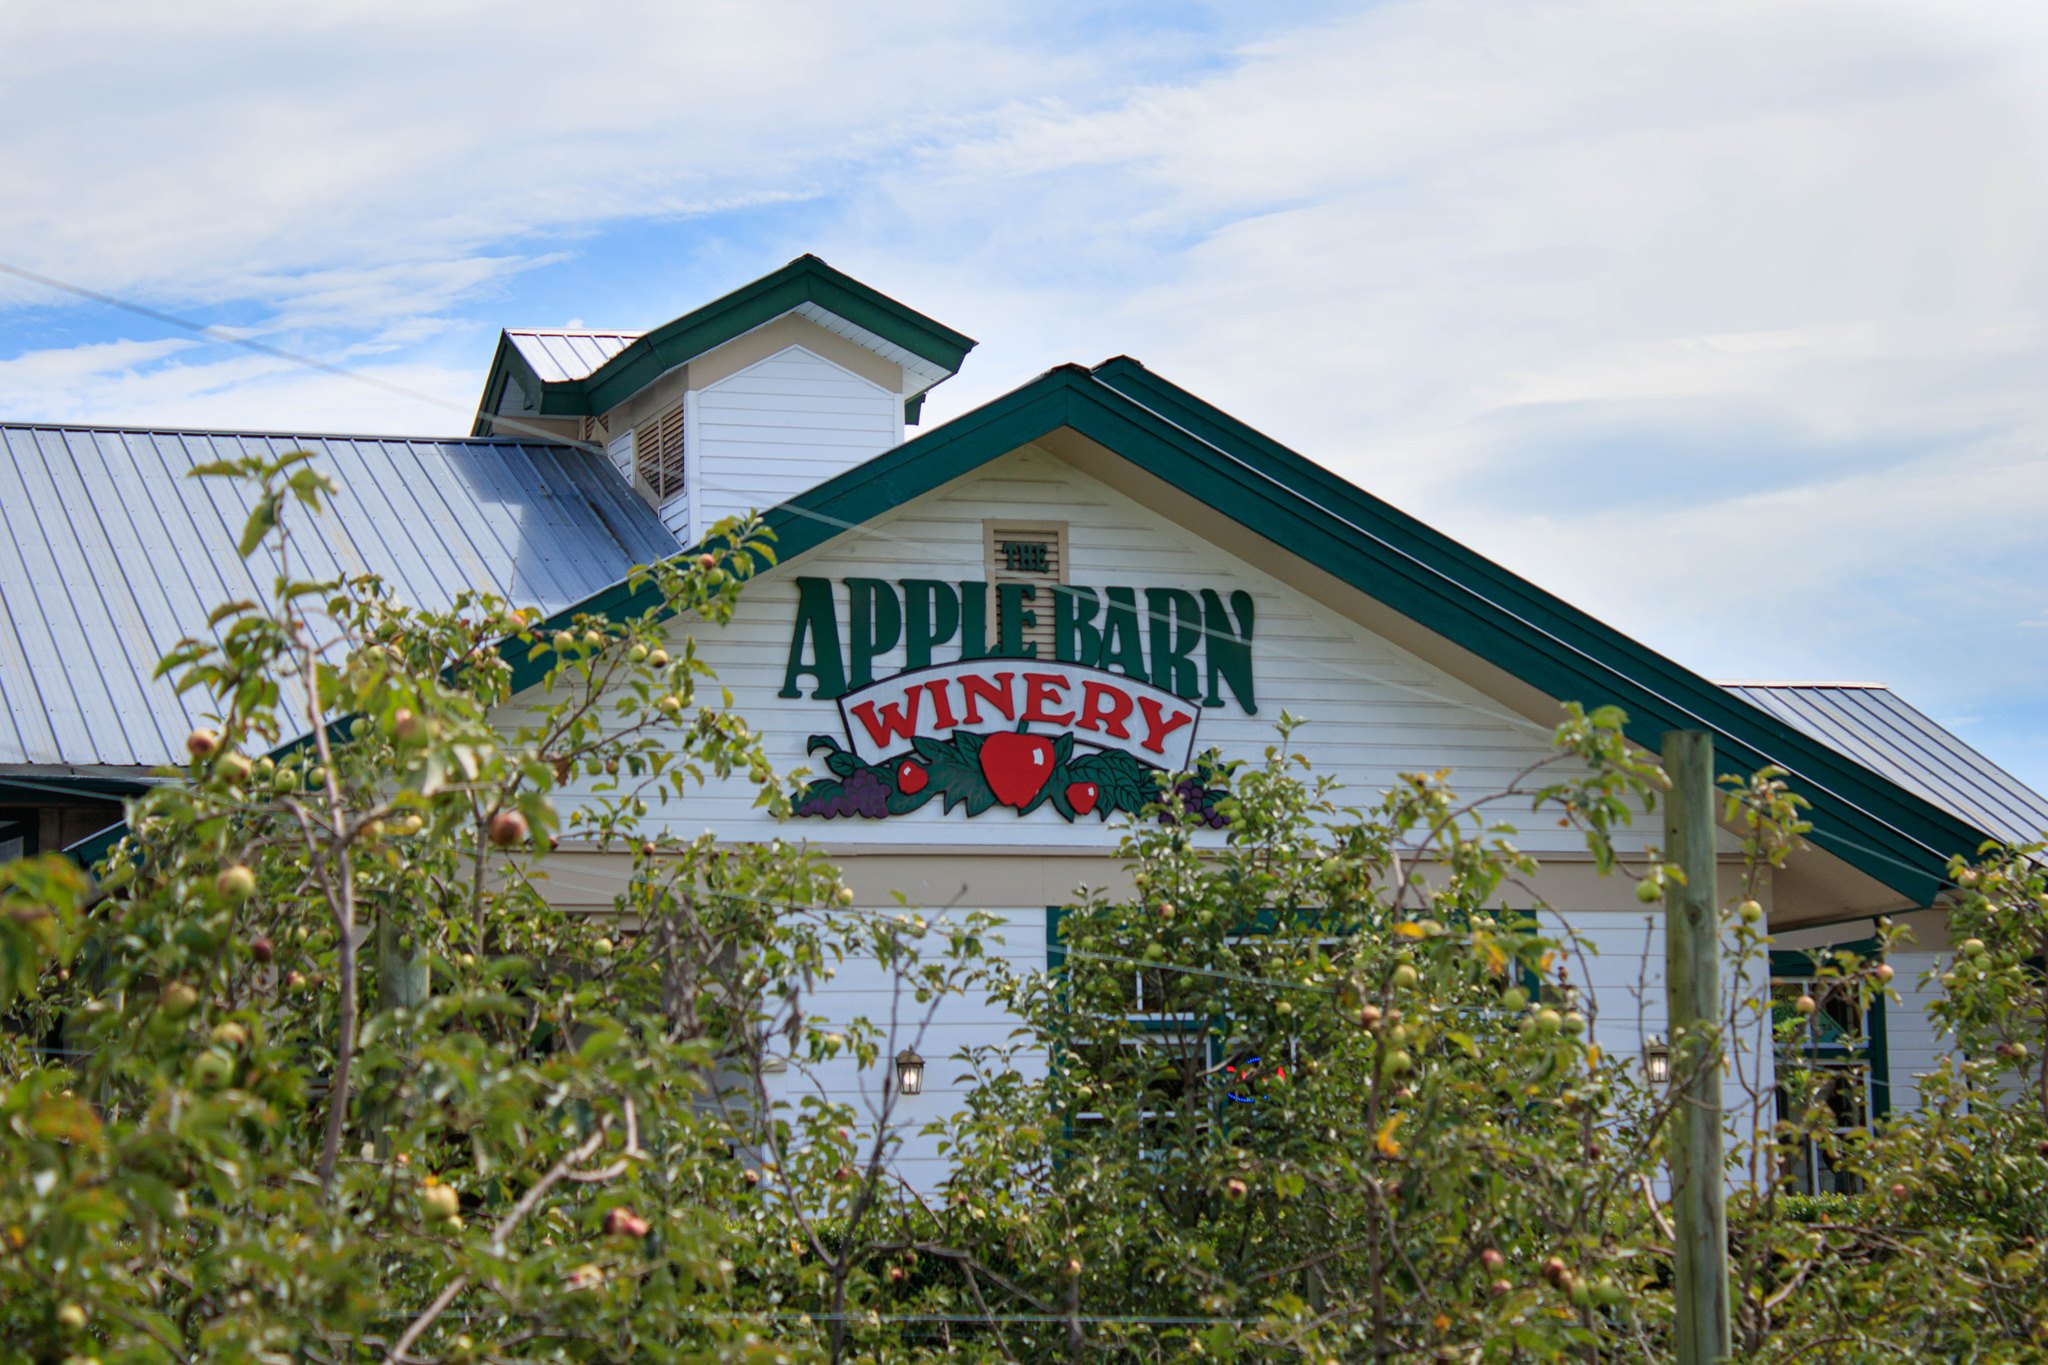 Apple Barn Winery in Sevierville